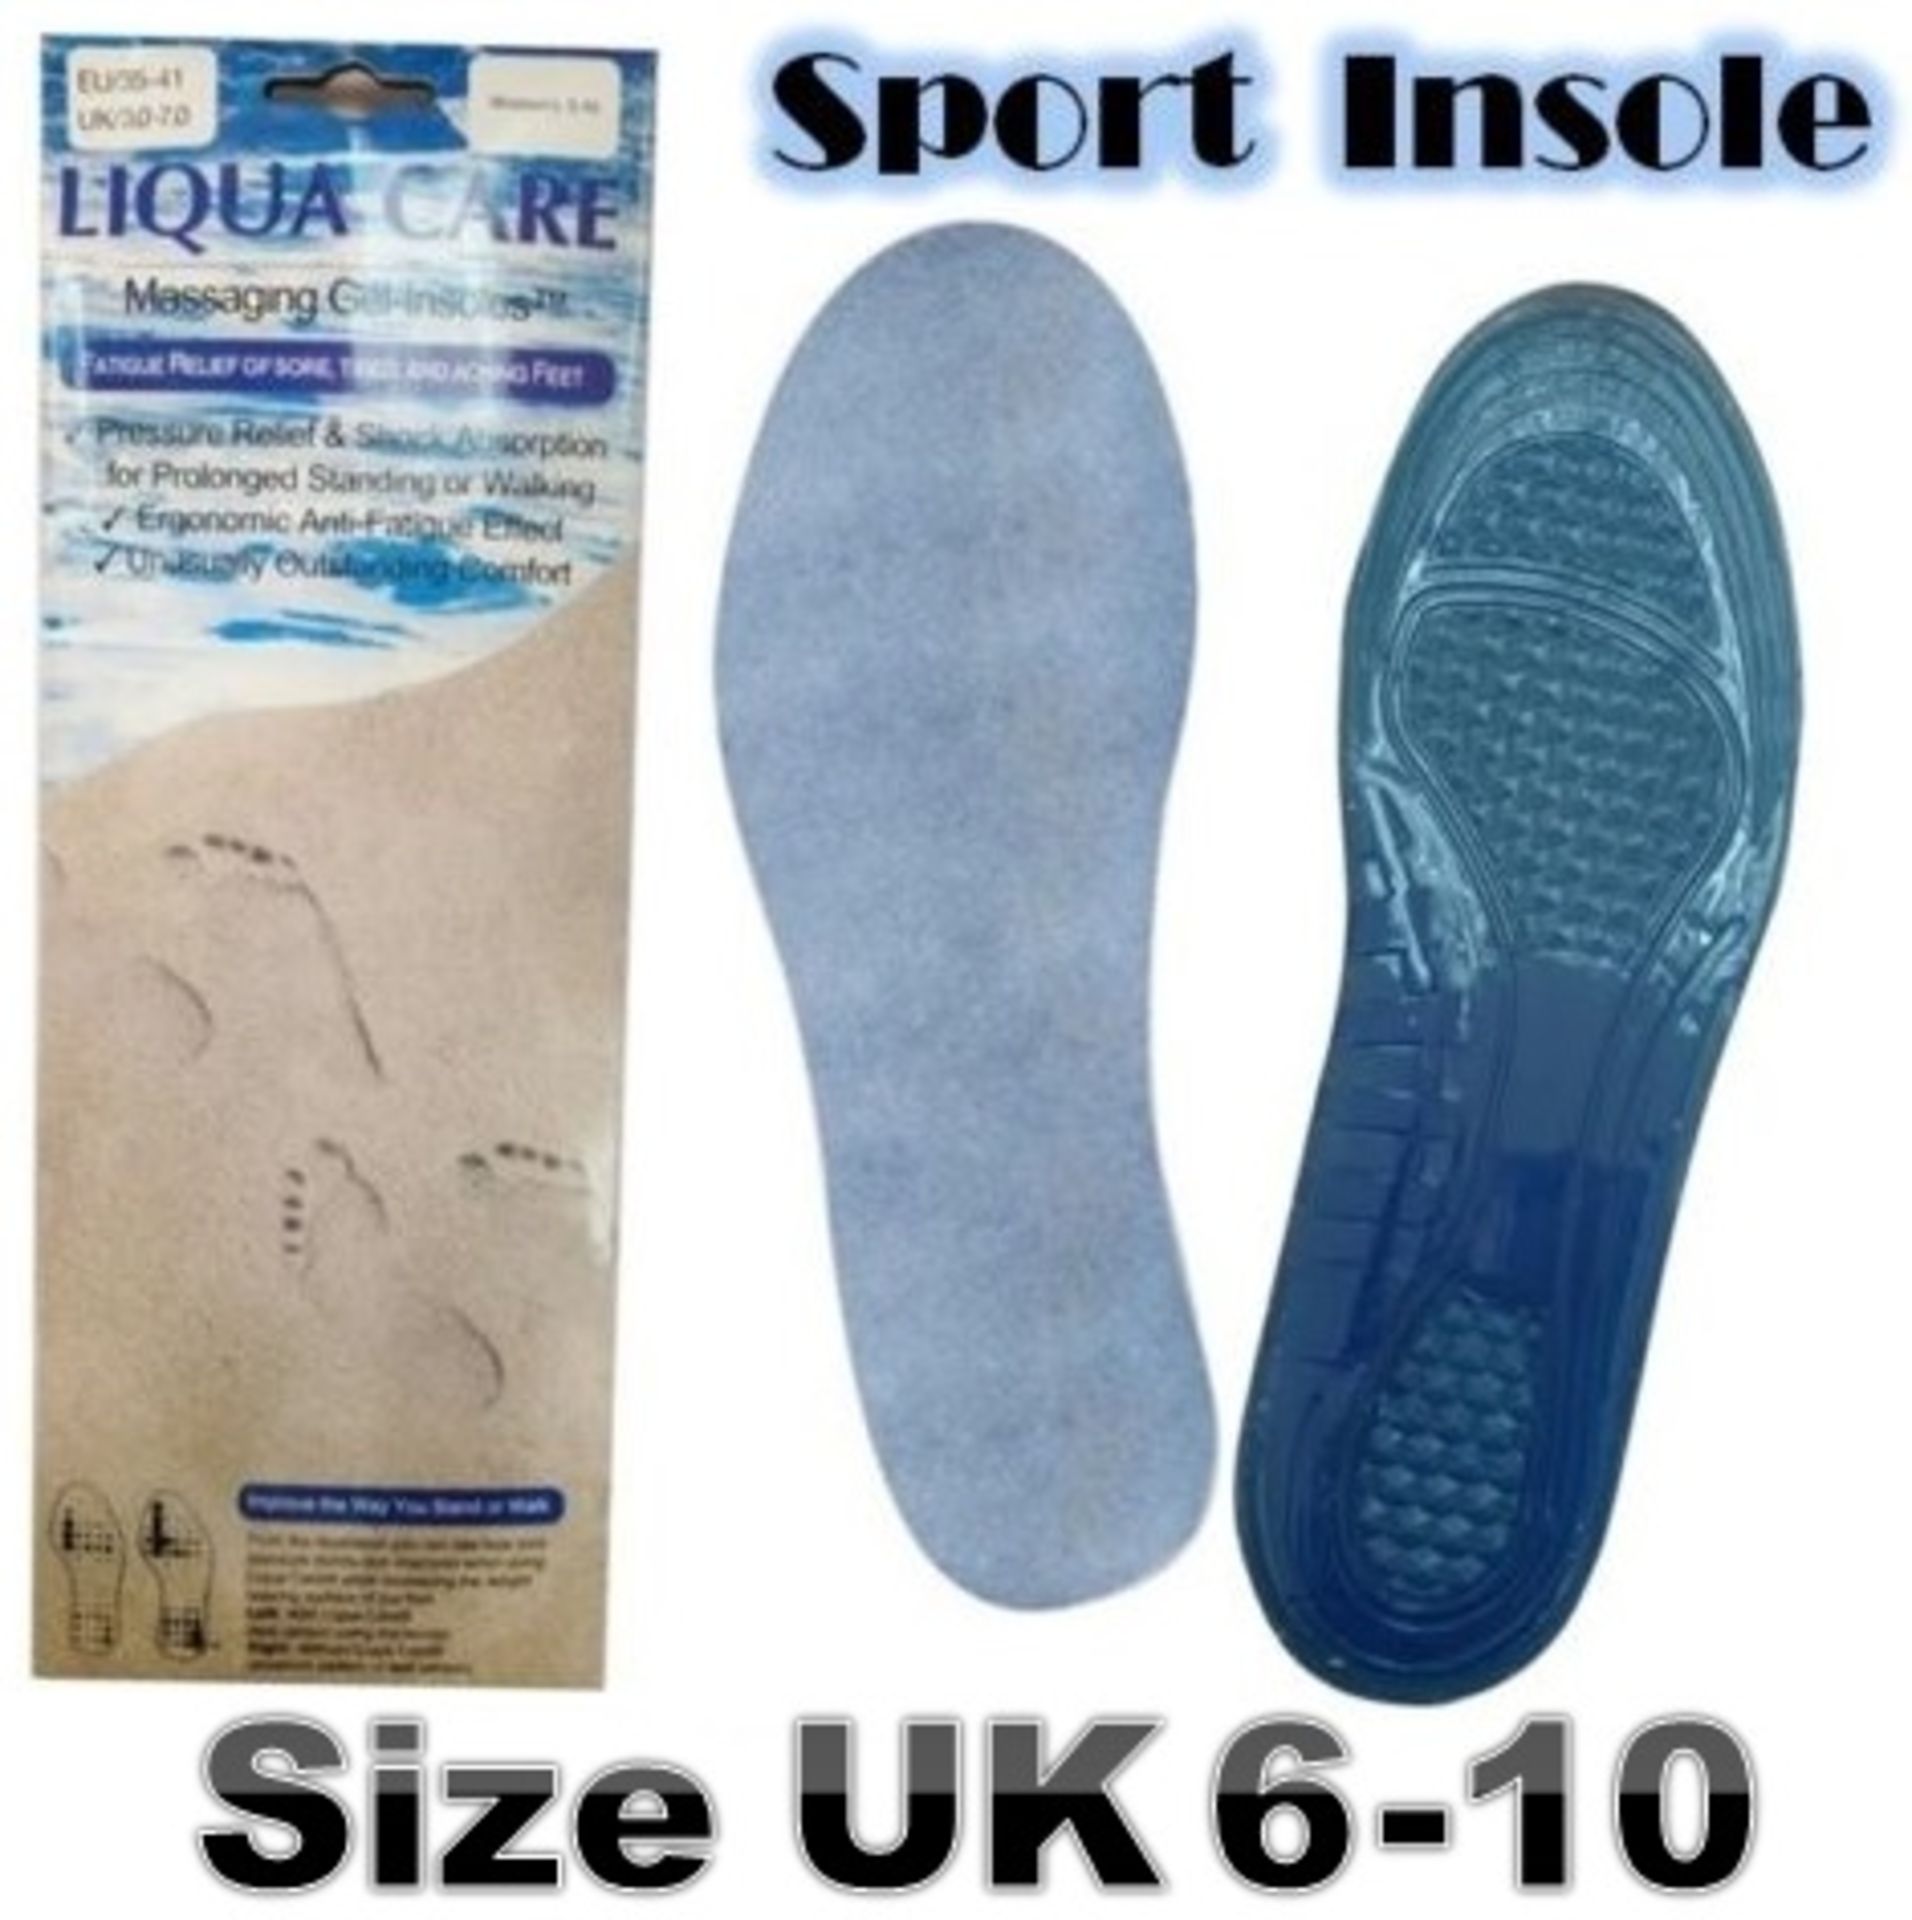 UK6 - UK10 size Men's Everyday Gel Insoles - Help Reduce Excessive Pressure of your Feet - Shock